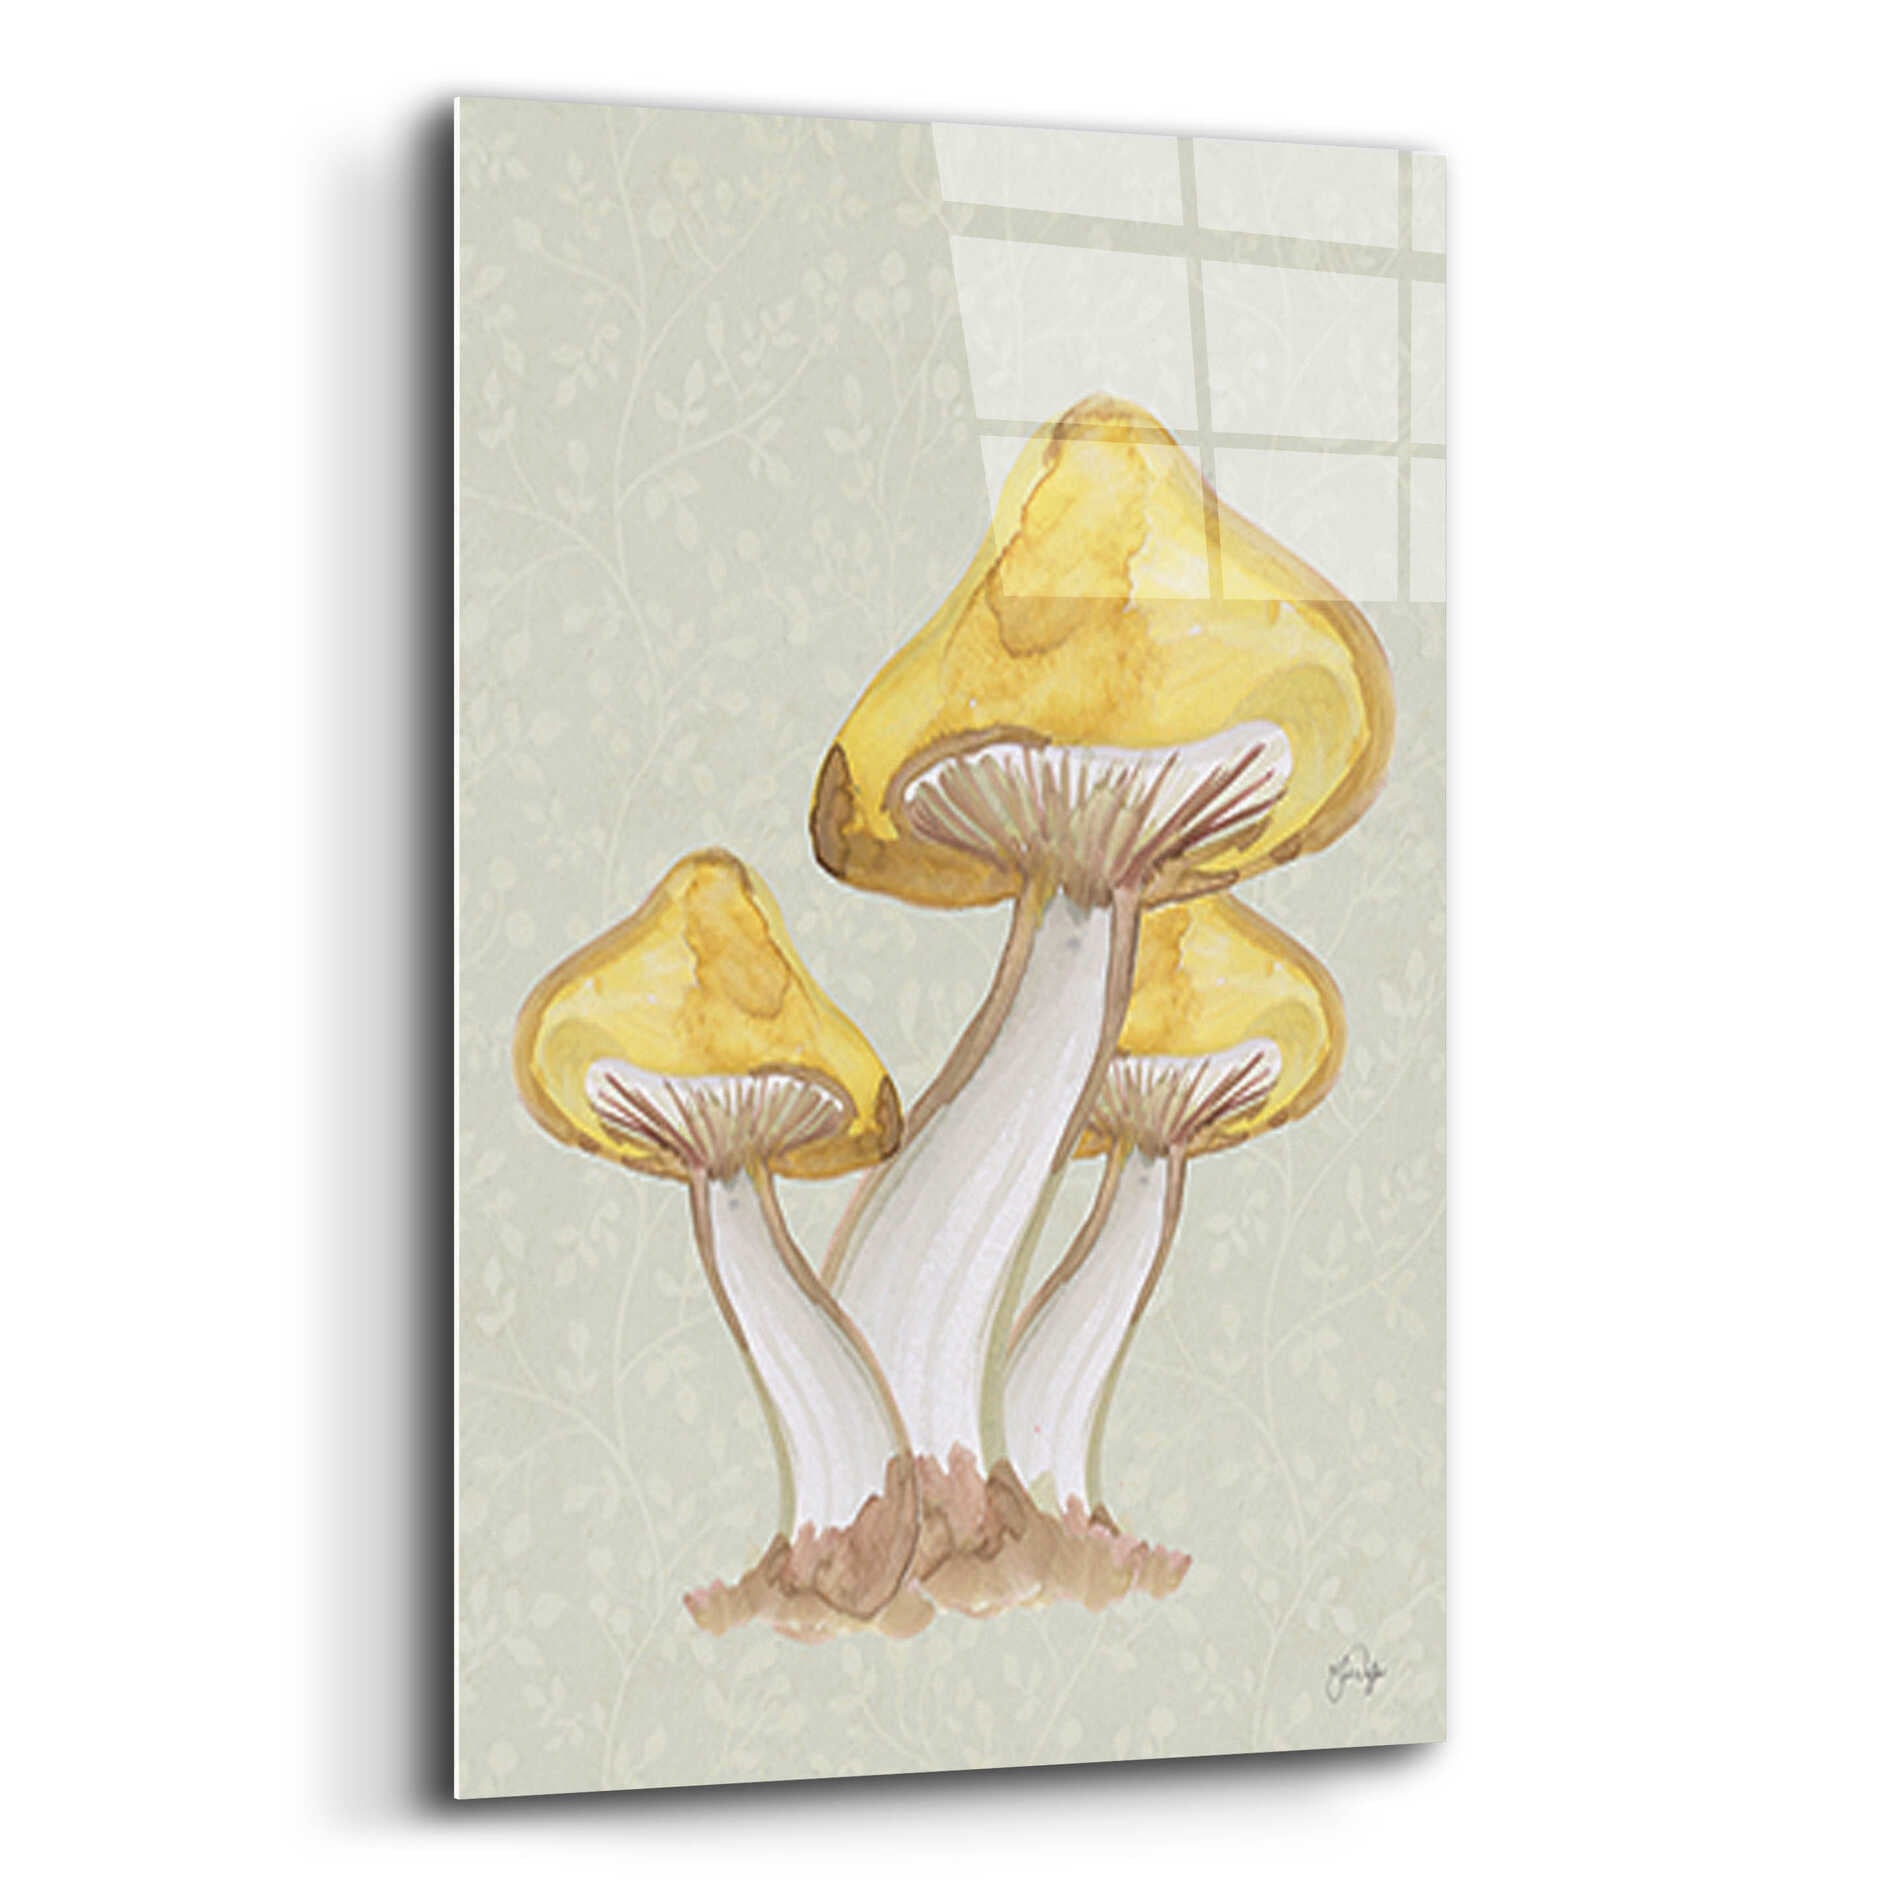 Epic Art 'Calming Mushrooms' by Yass Naffas Designs, Acrylic Glass Wall Art,16x24